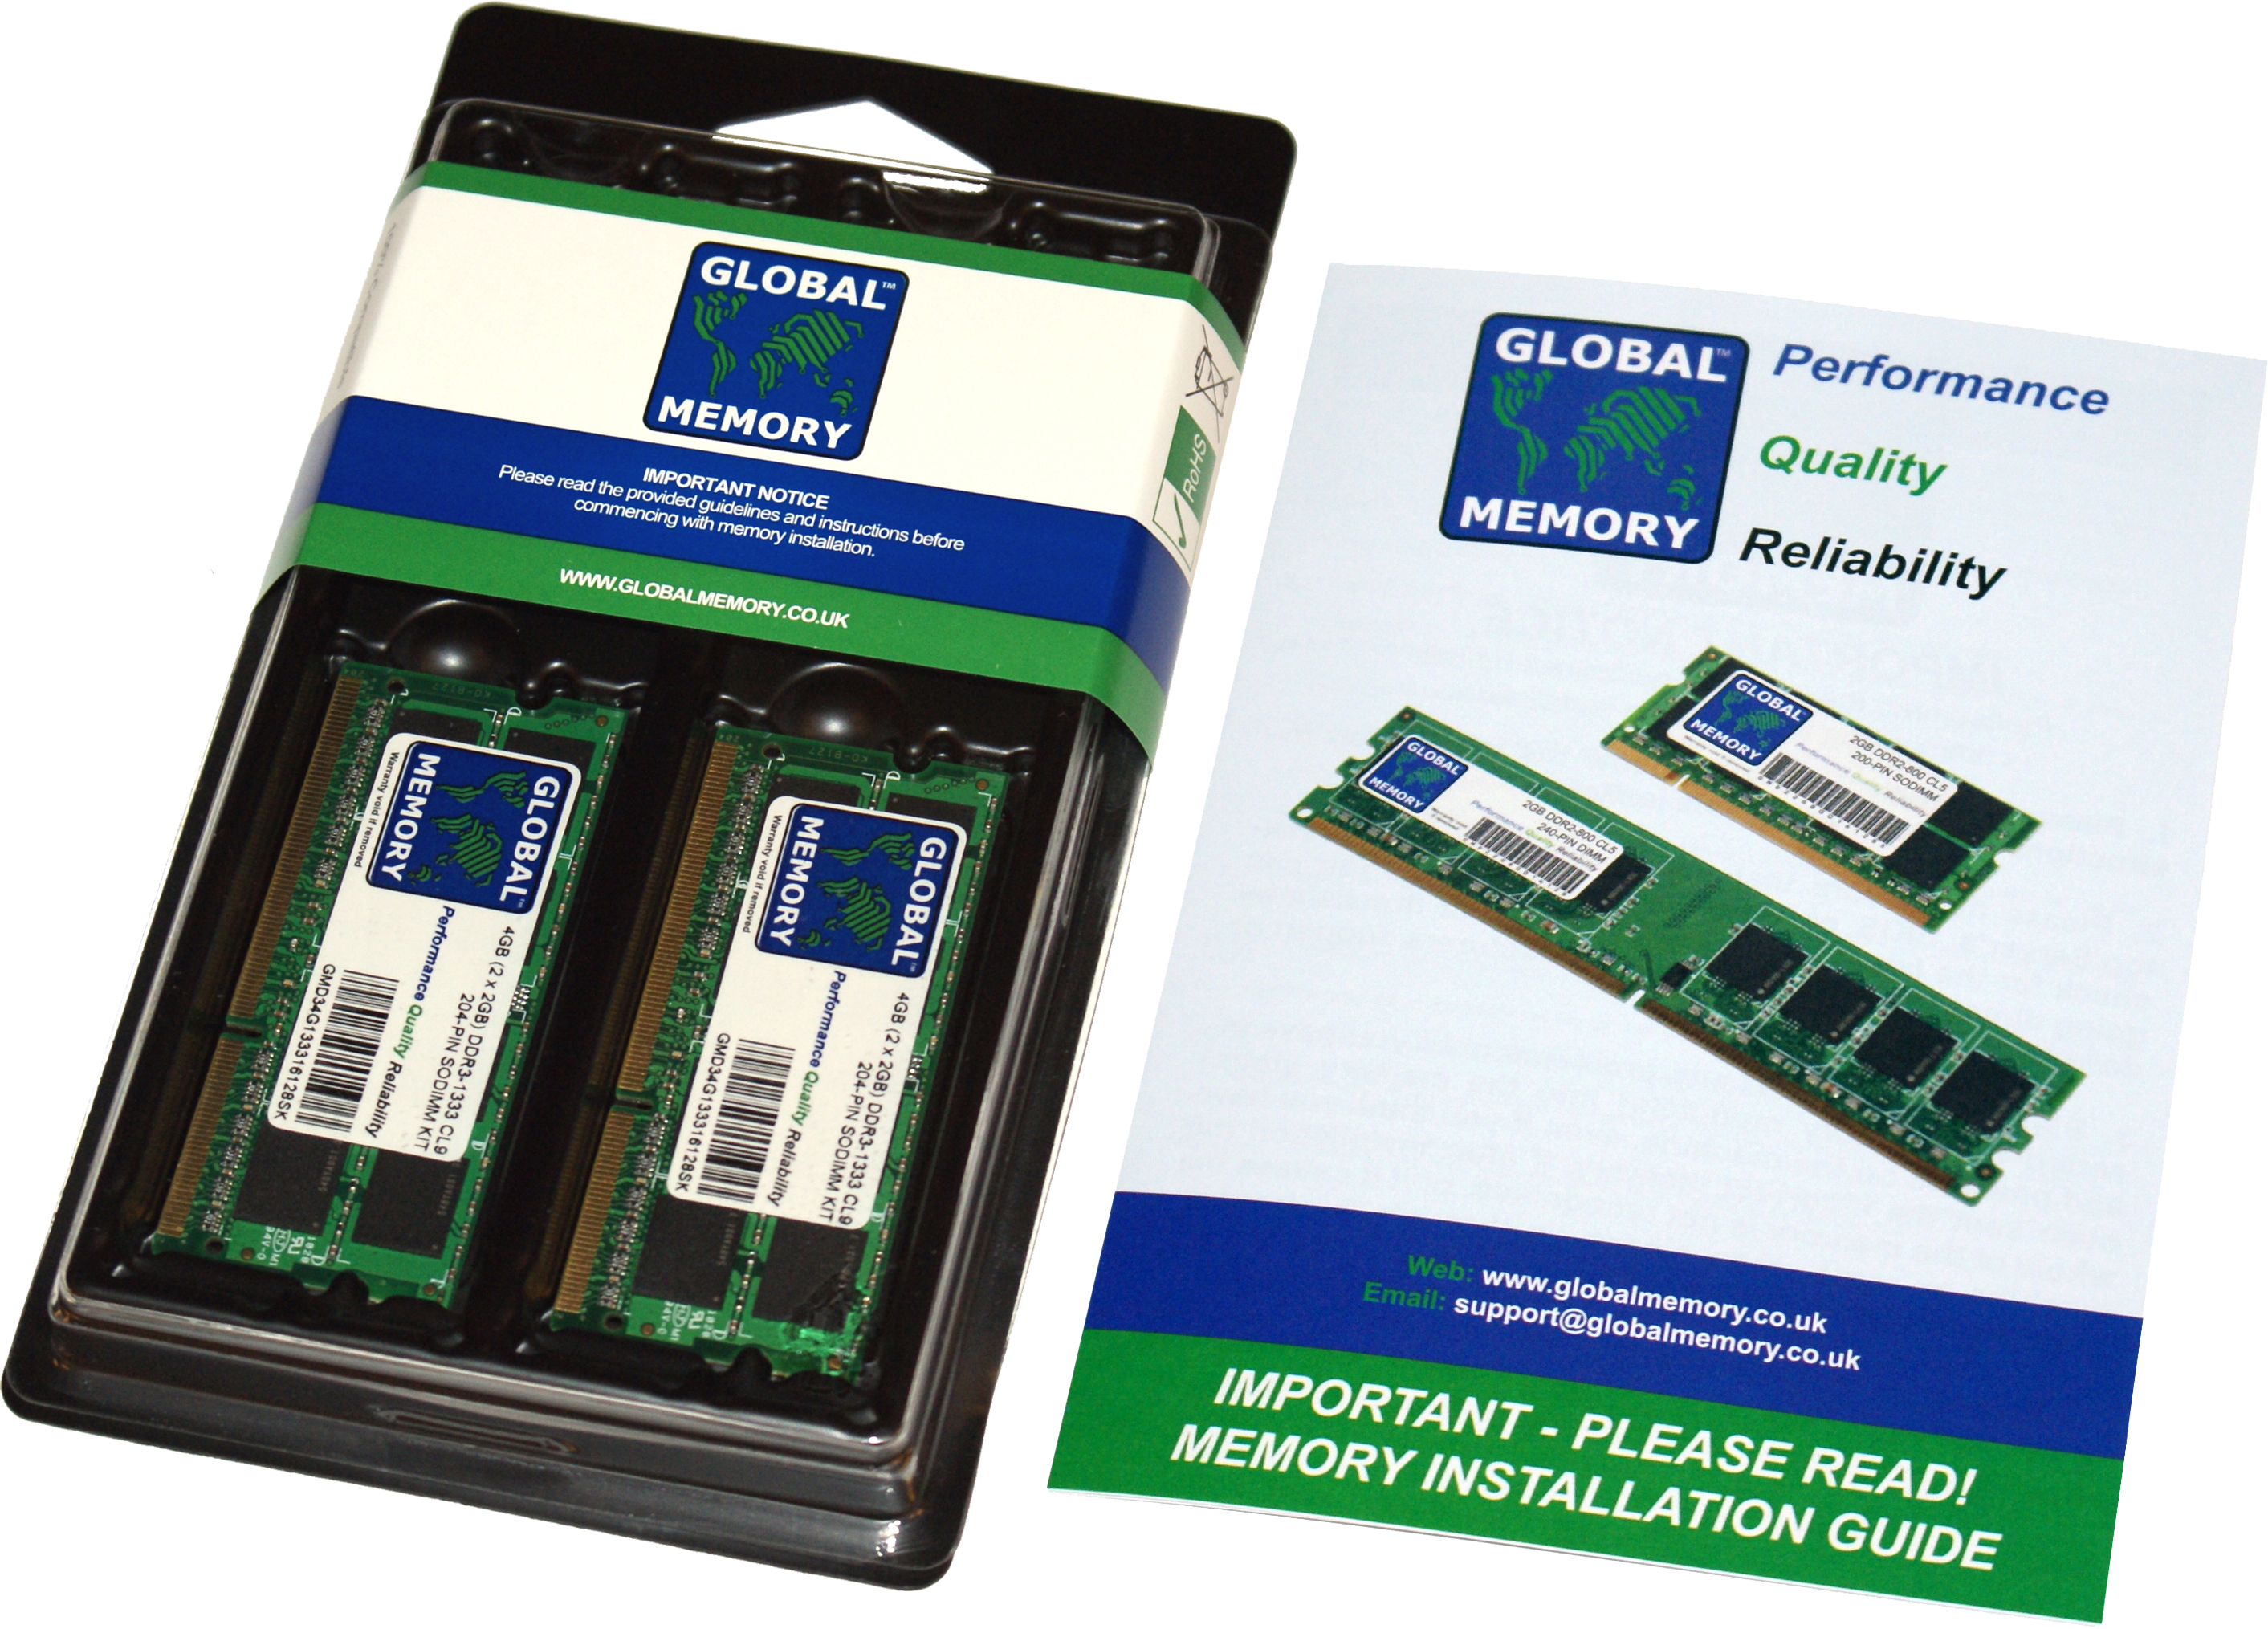 16GB (2 x 8GB) DDR3 1866MHz PC3-14900 204-PIN SODIMM MEMORY RAM KIT FOR DELL LAPTOPS/NOTEBOOKS